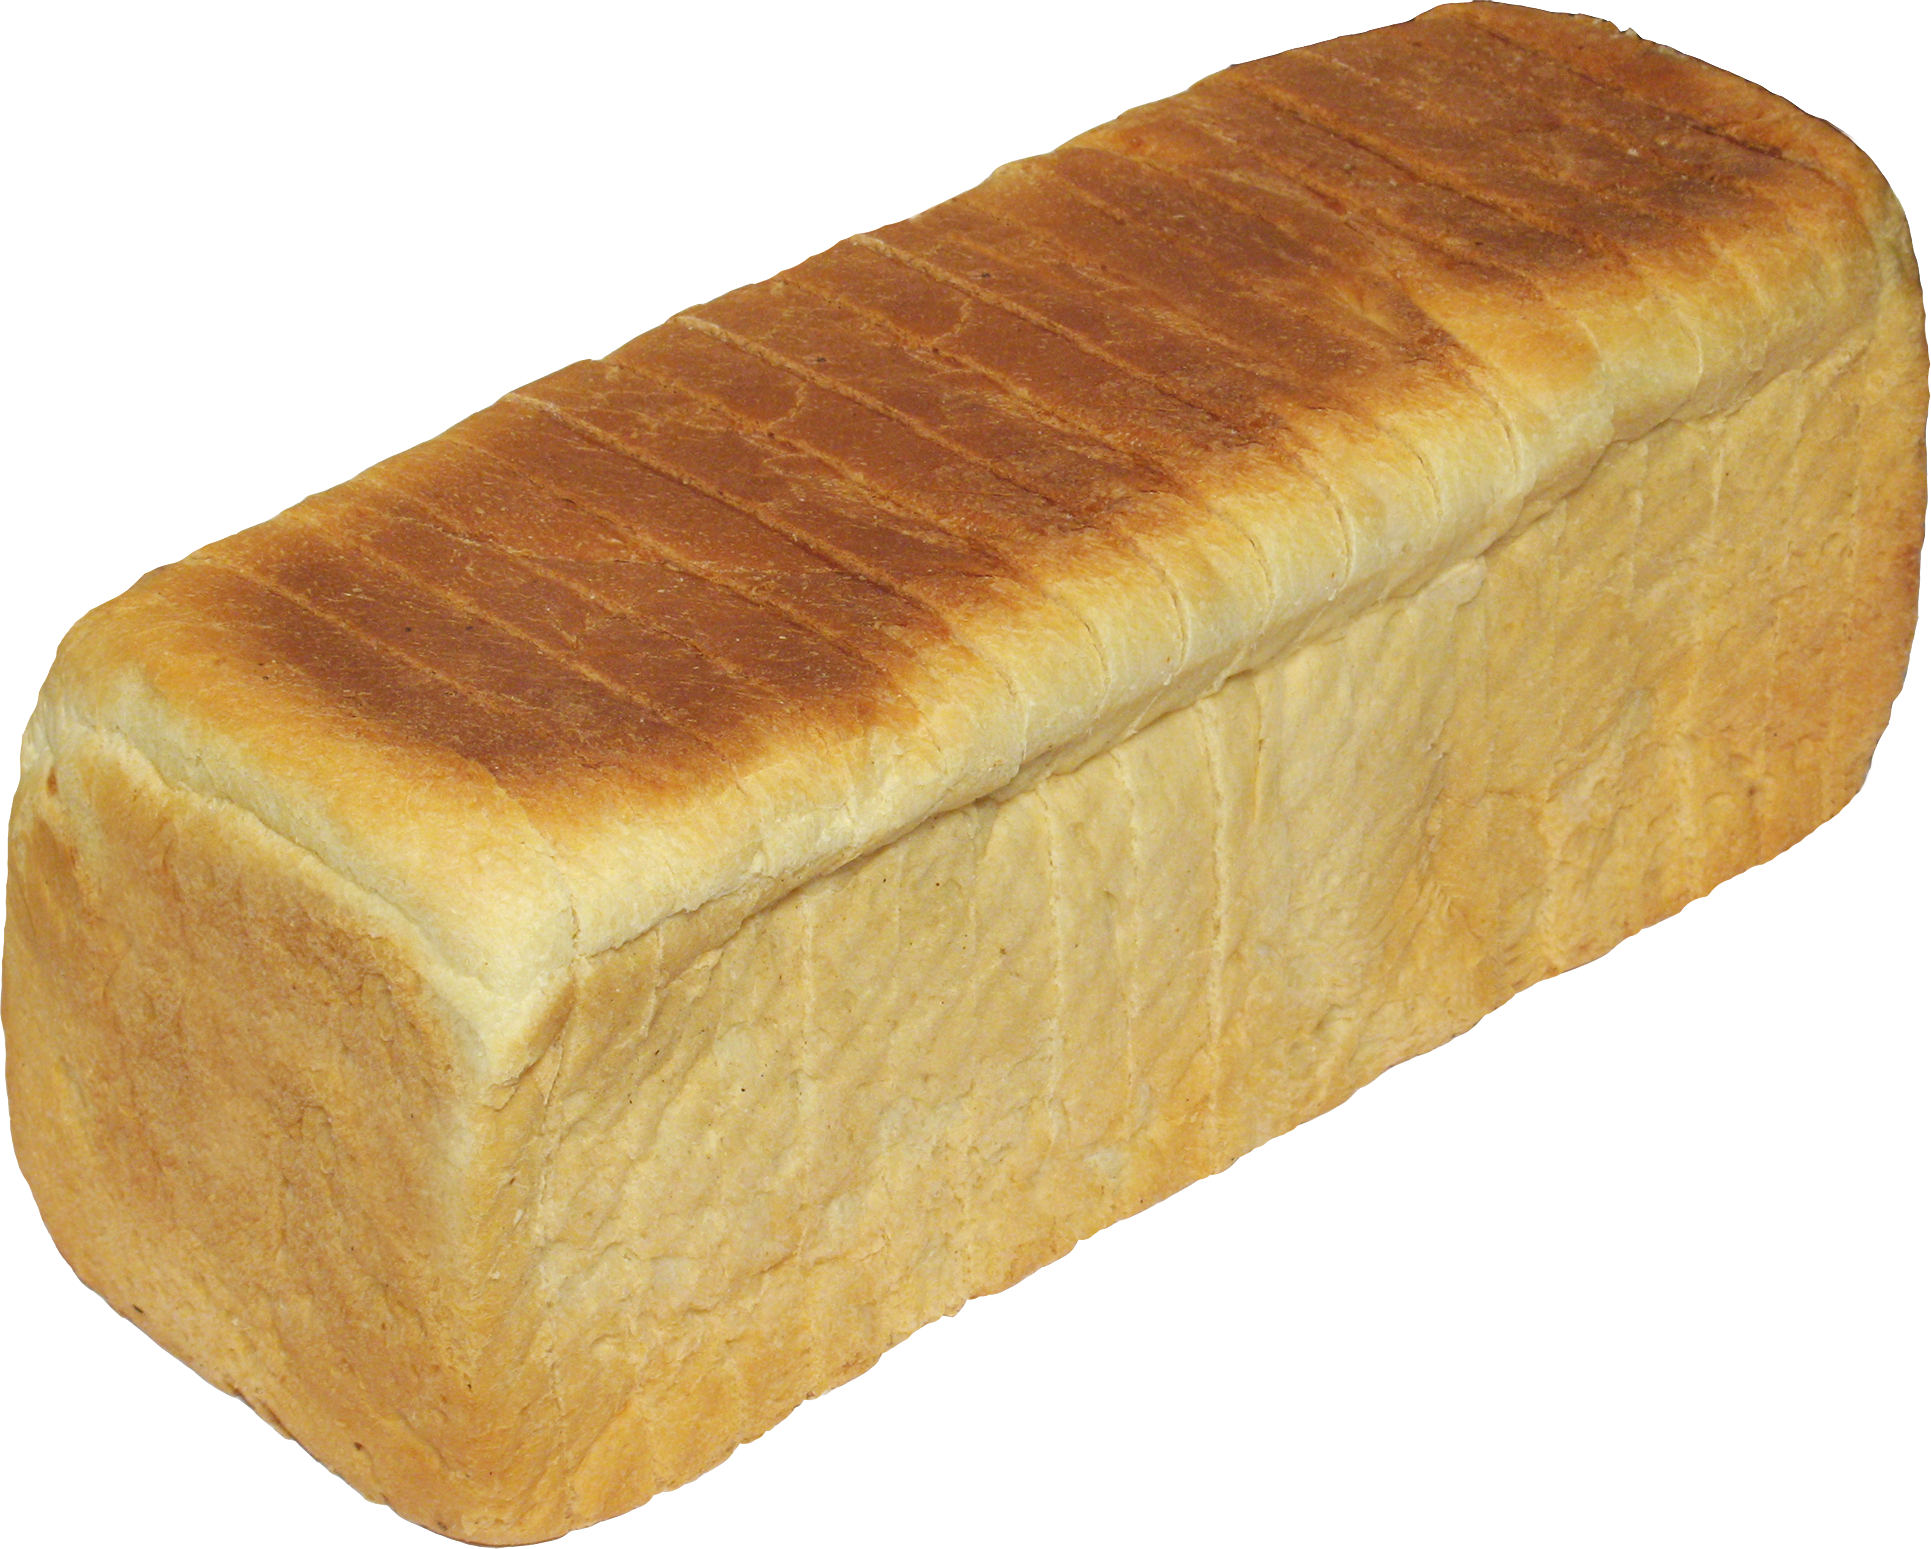 Loaf Bake Bread Free Download PNG HD PNG Image